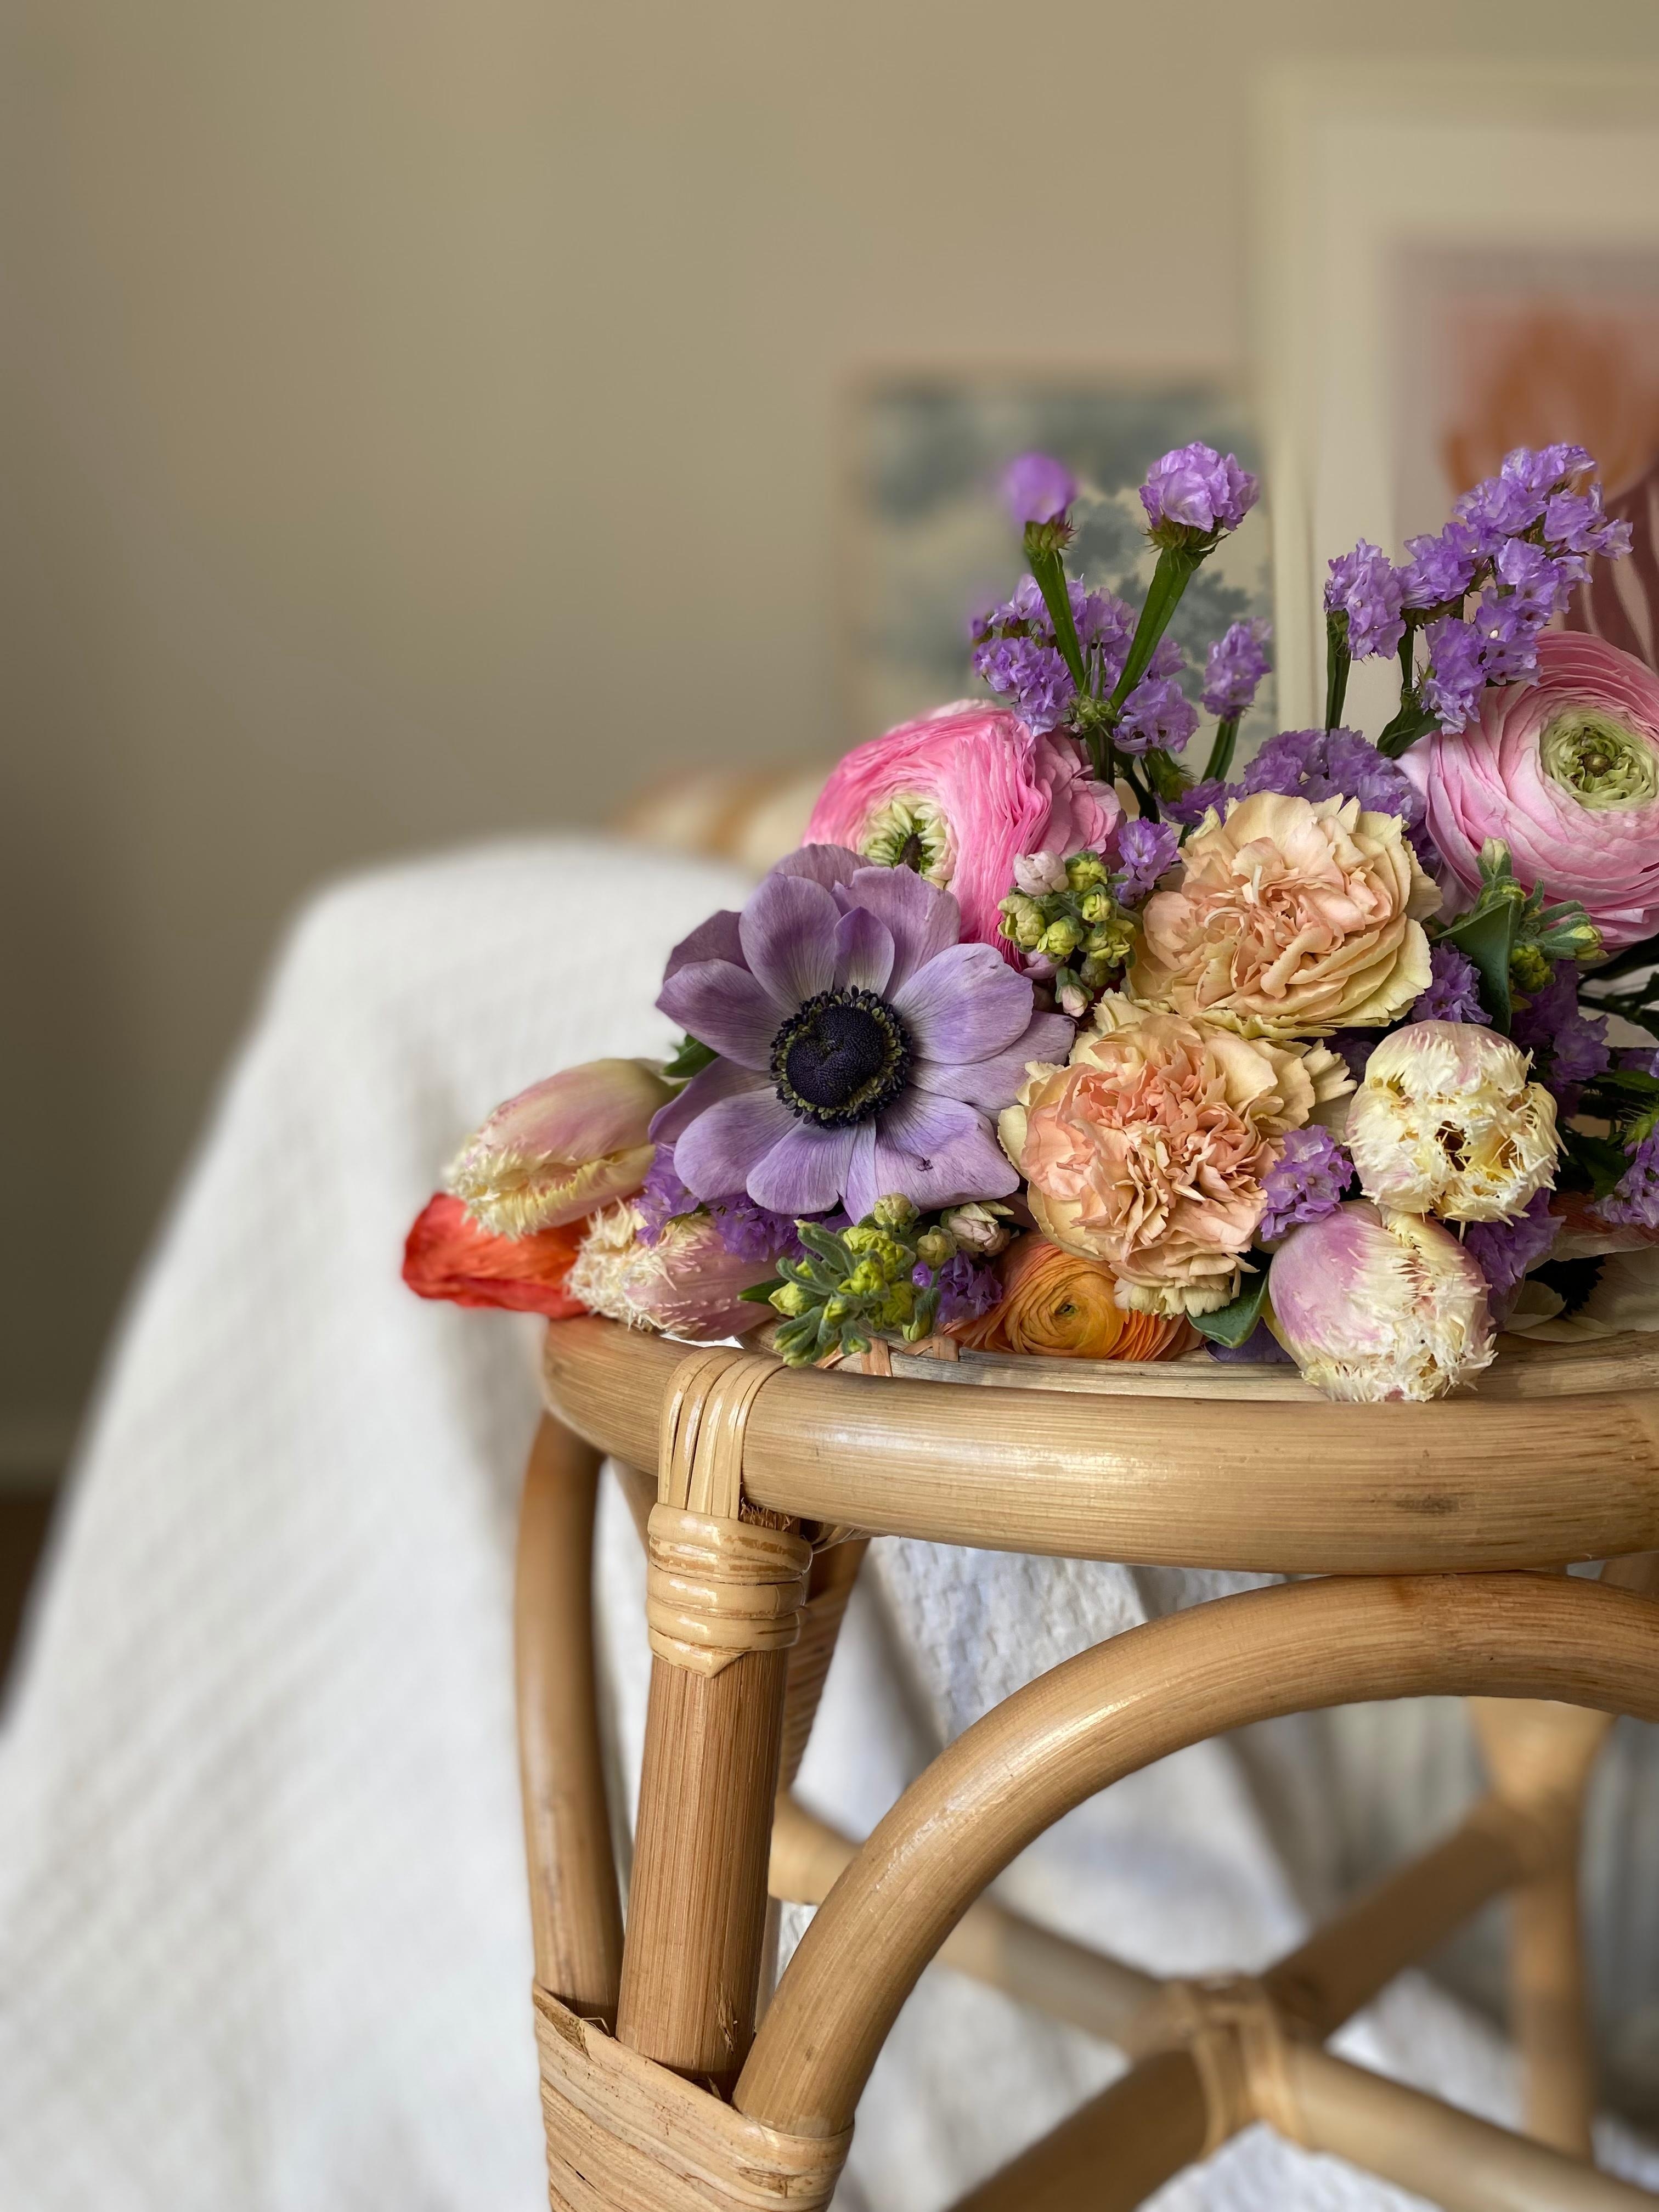 Flowers 
#springdecor#flowerpower#interiorandliving#blumenmädchen#frühlingsstrauss#floraldesign 